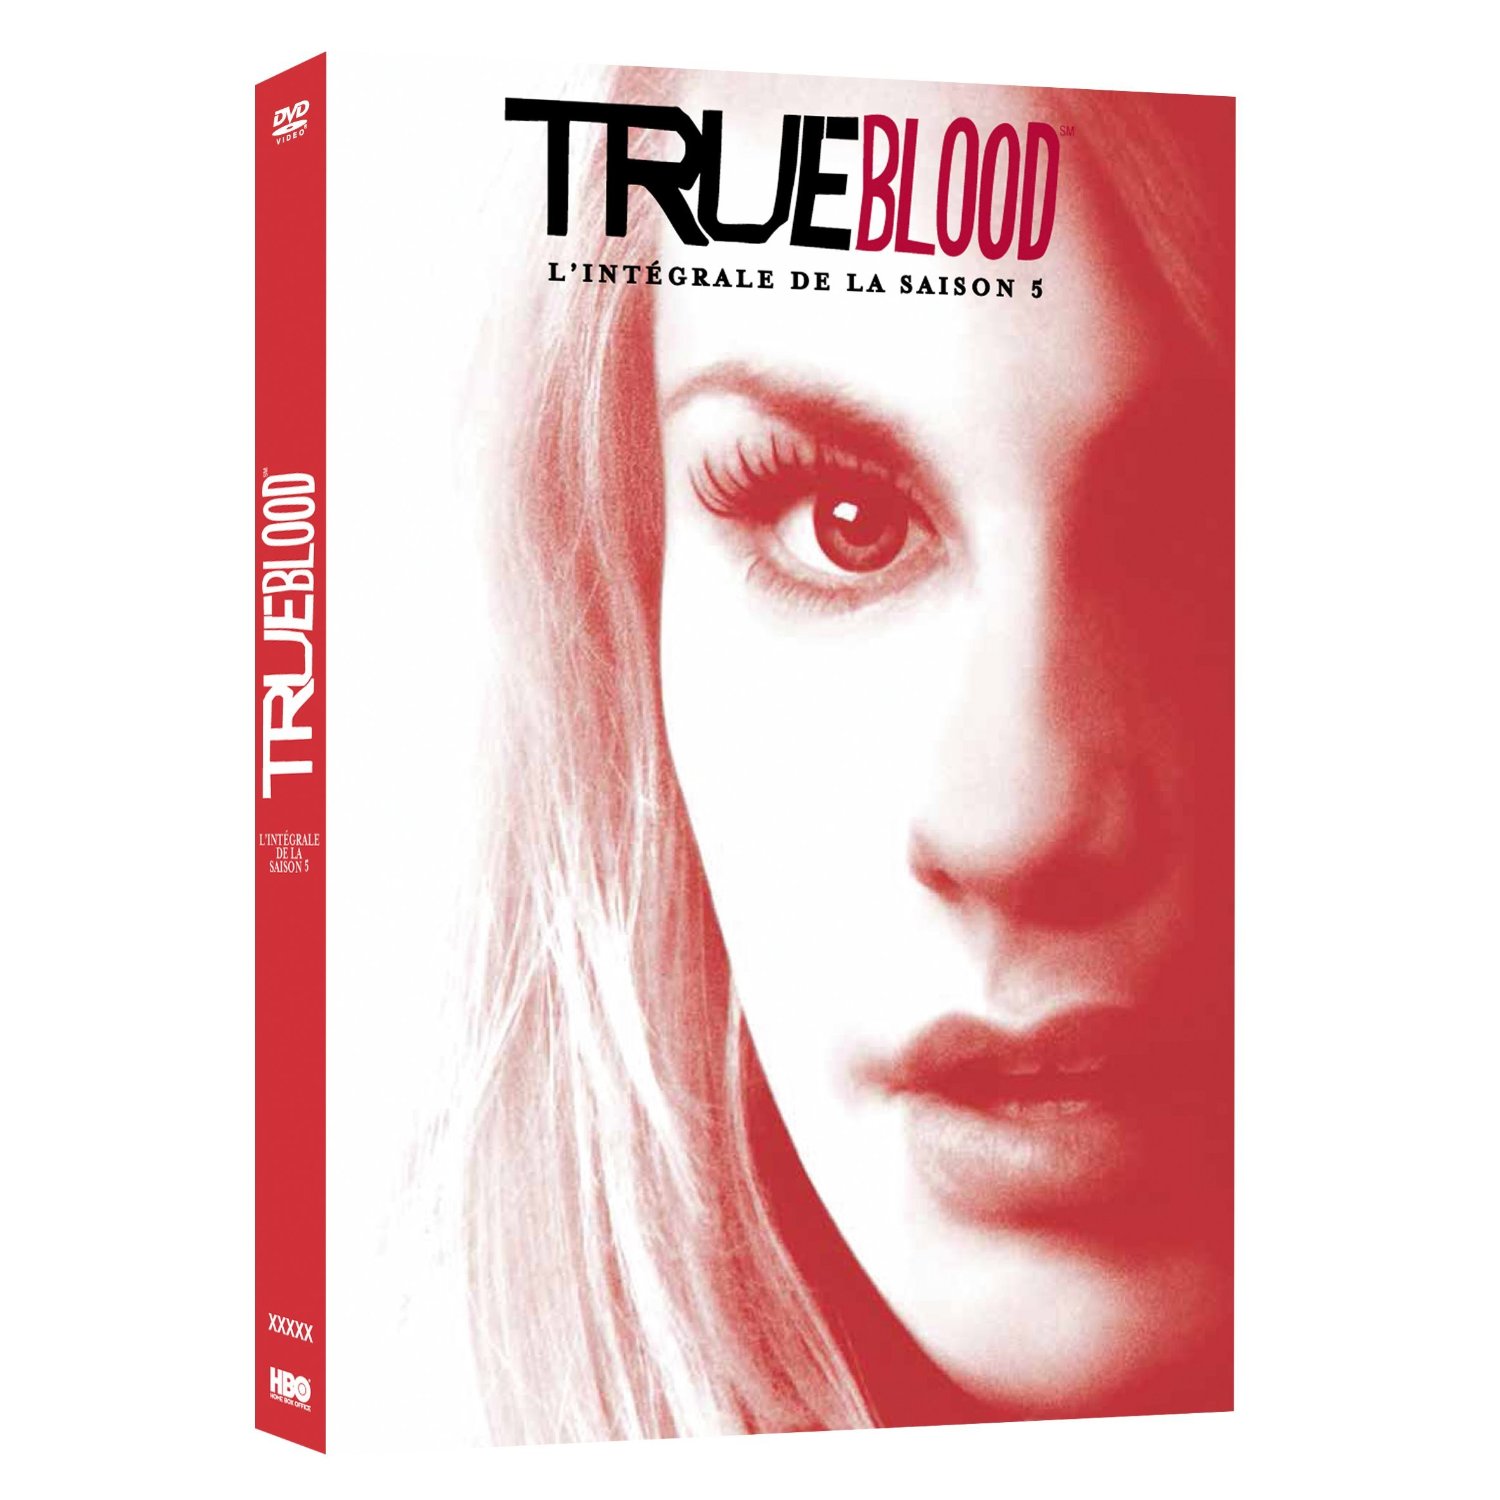 True Blood saison 5 DVD